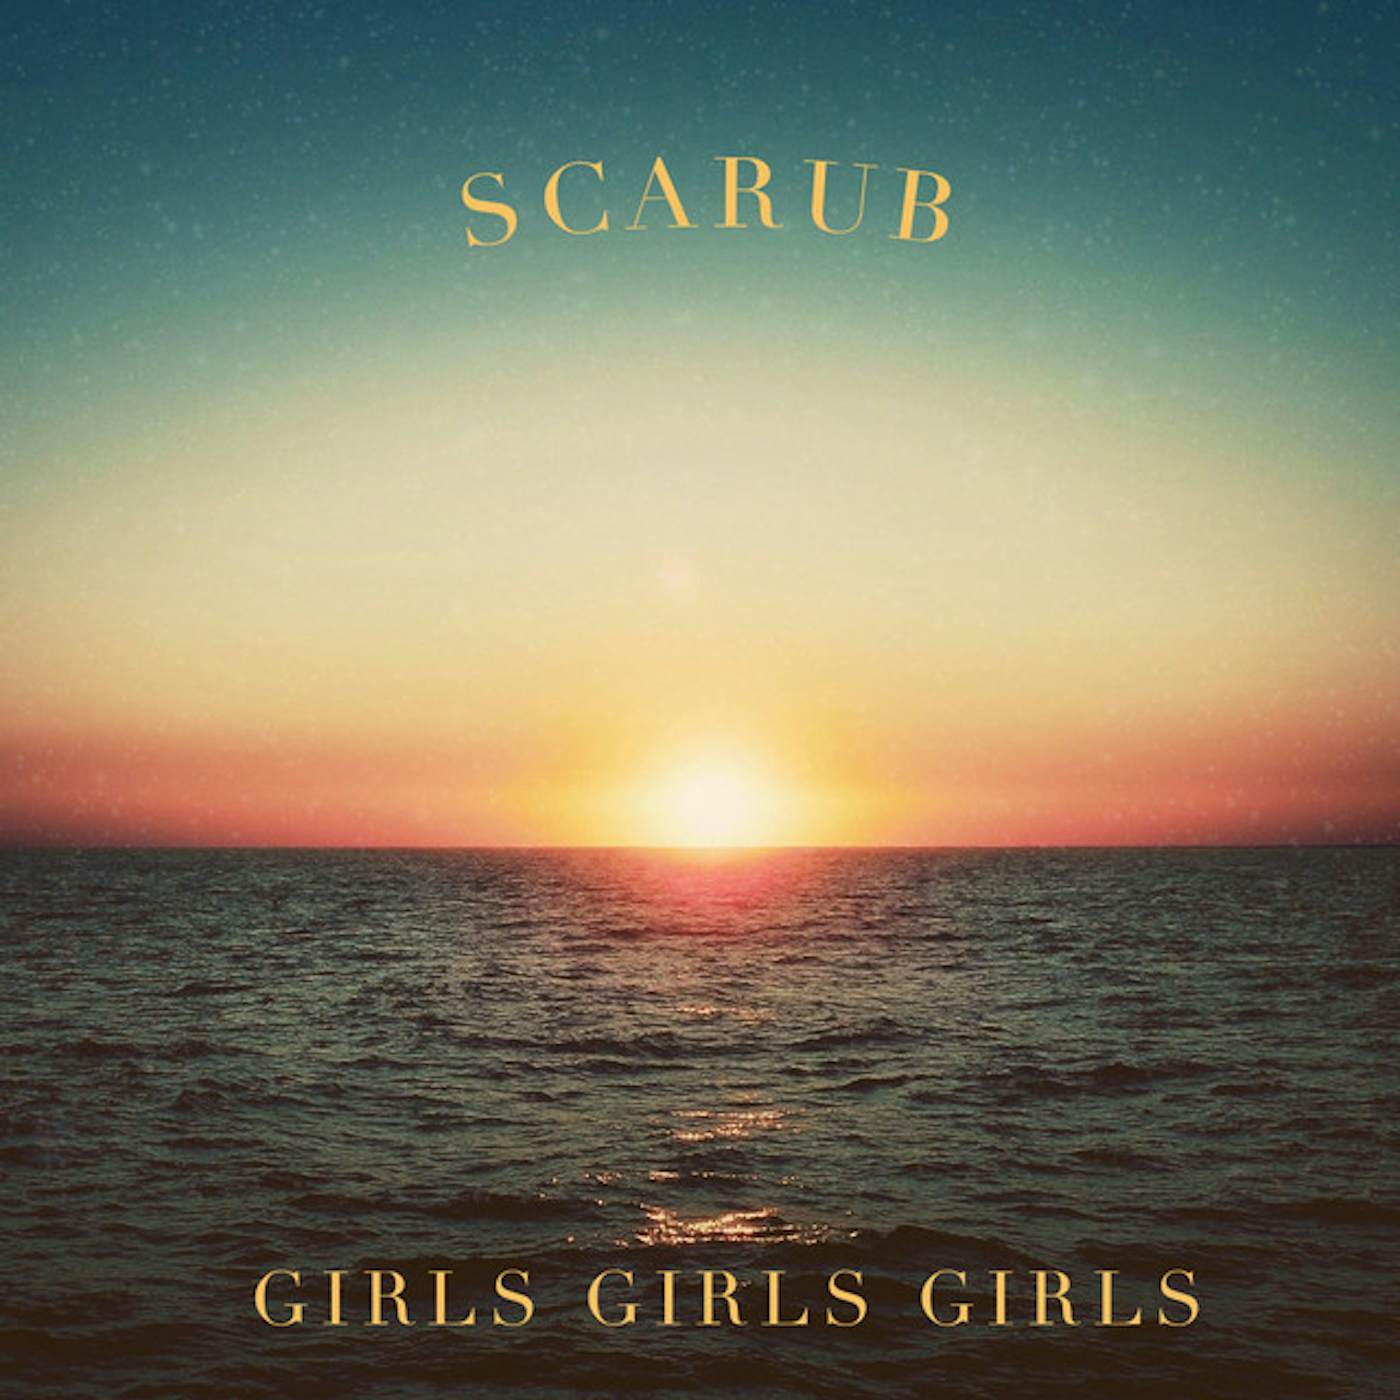 Scarub GIRLS GIRLS GIRLS (DIG) CD